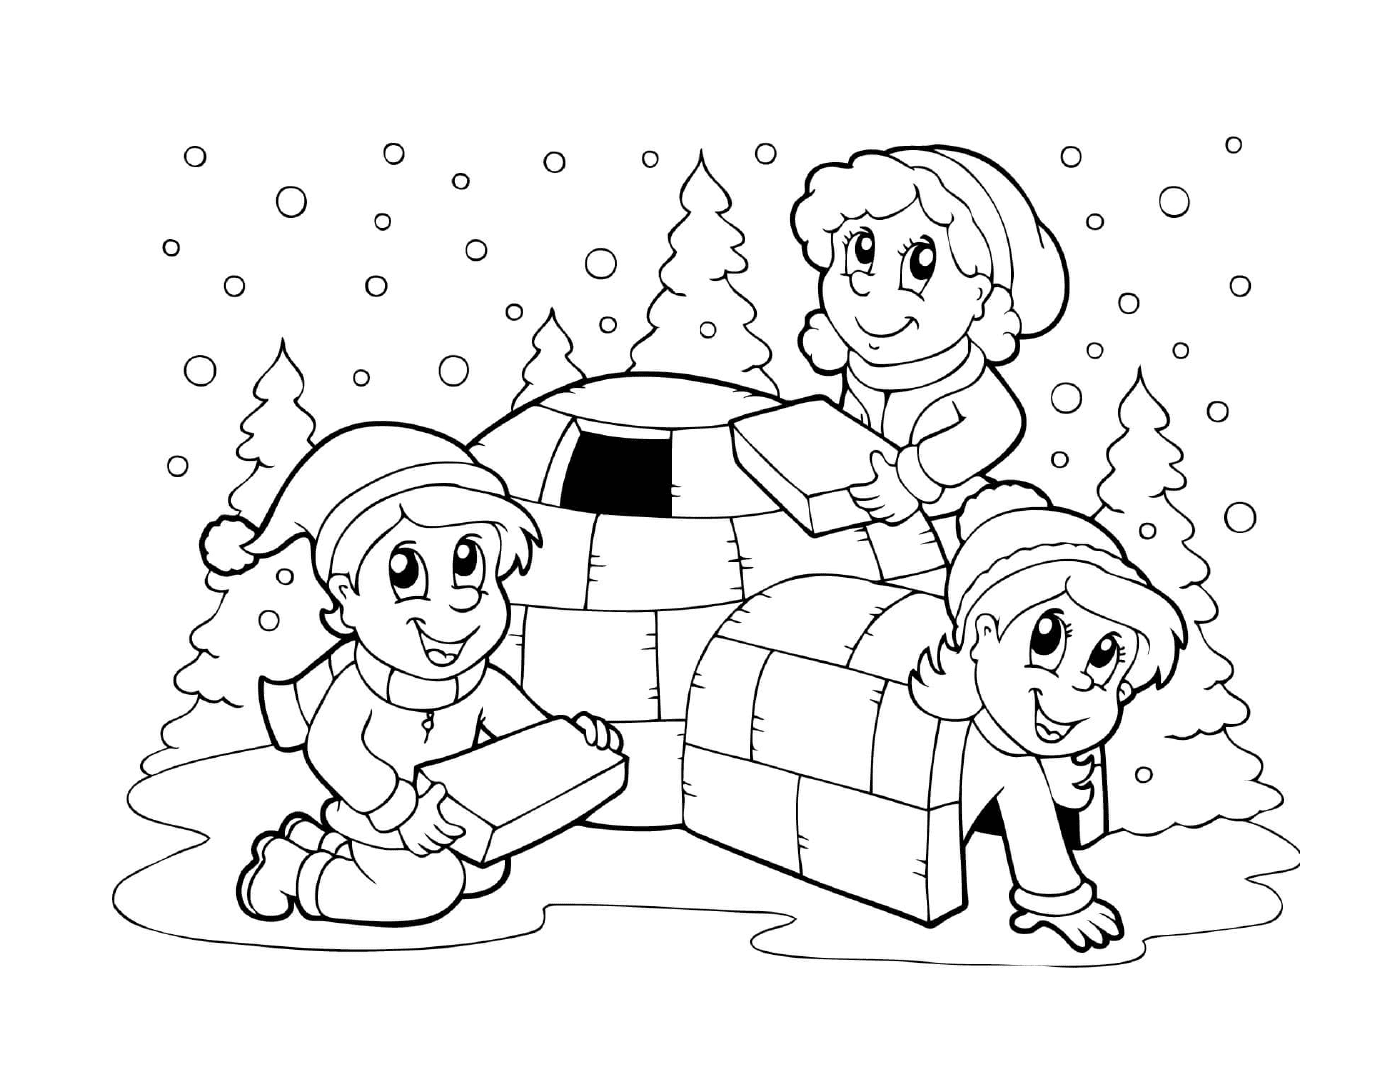  Children build an igloo in winter 